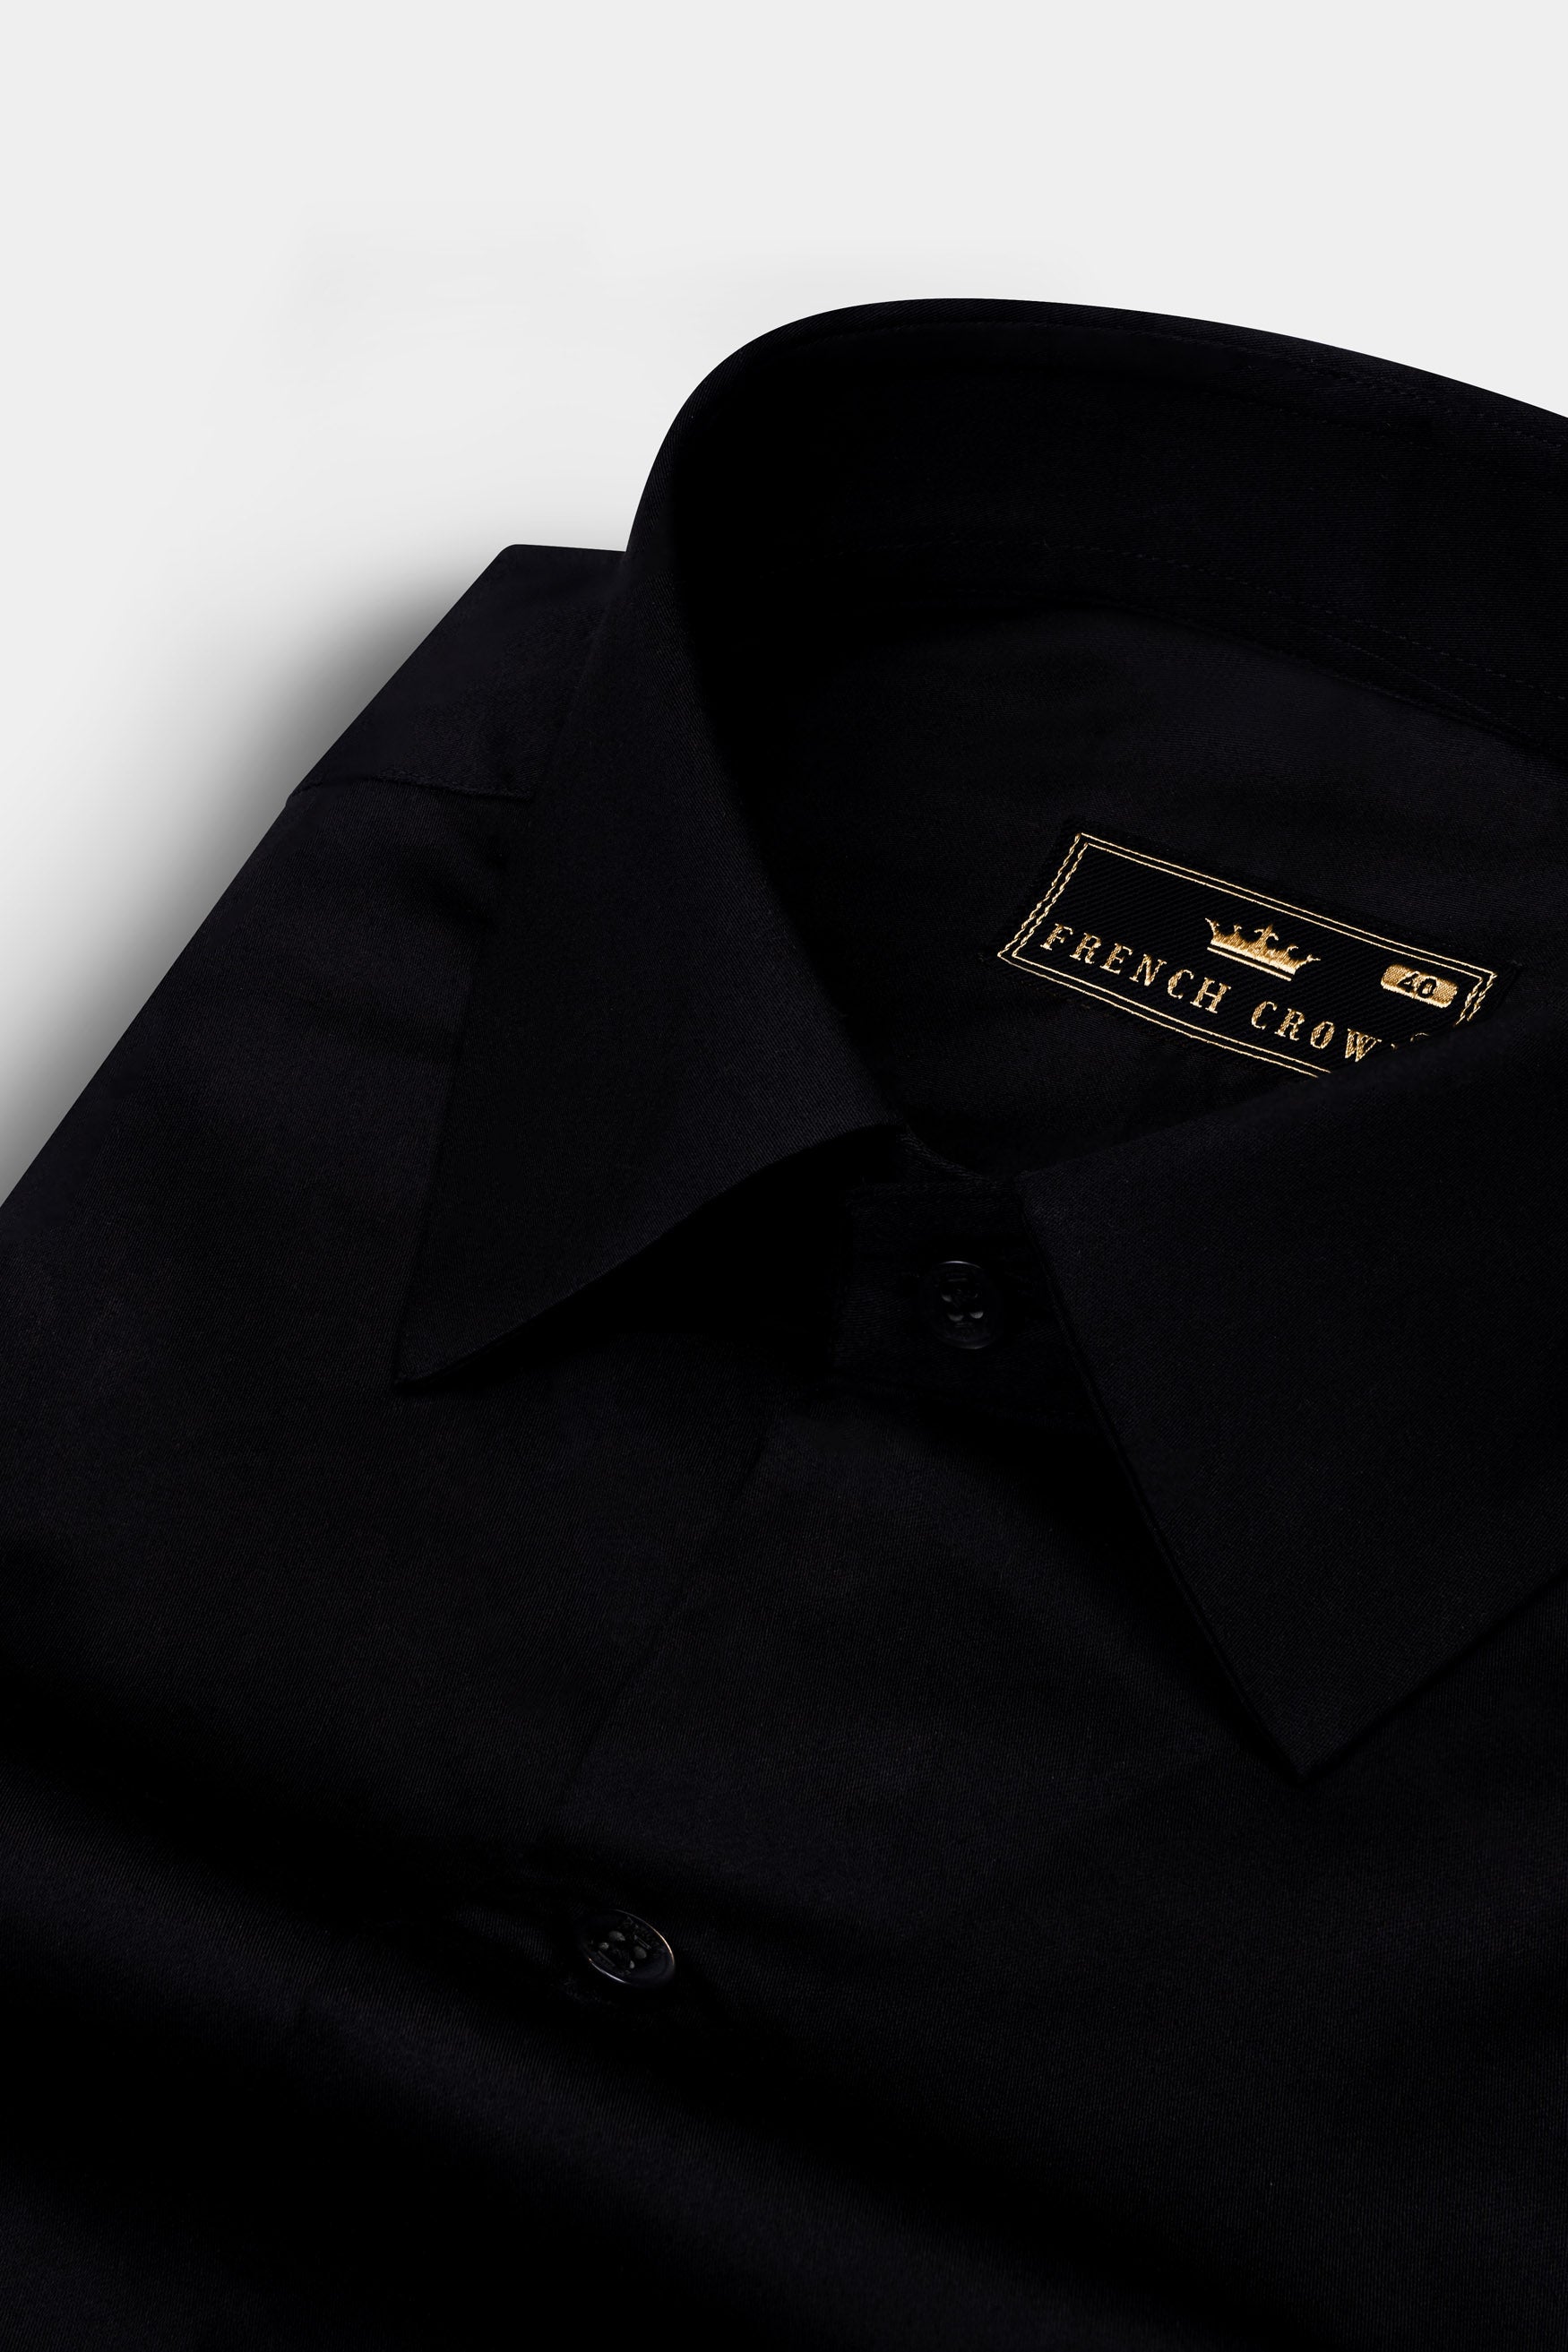 Jade Black French Crown Acronym Embroidered Subtle Sheen Super Soft Premium Cotton Designer Shirt